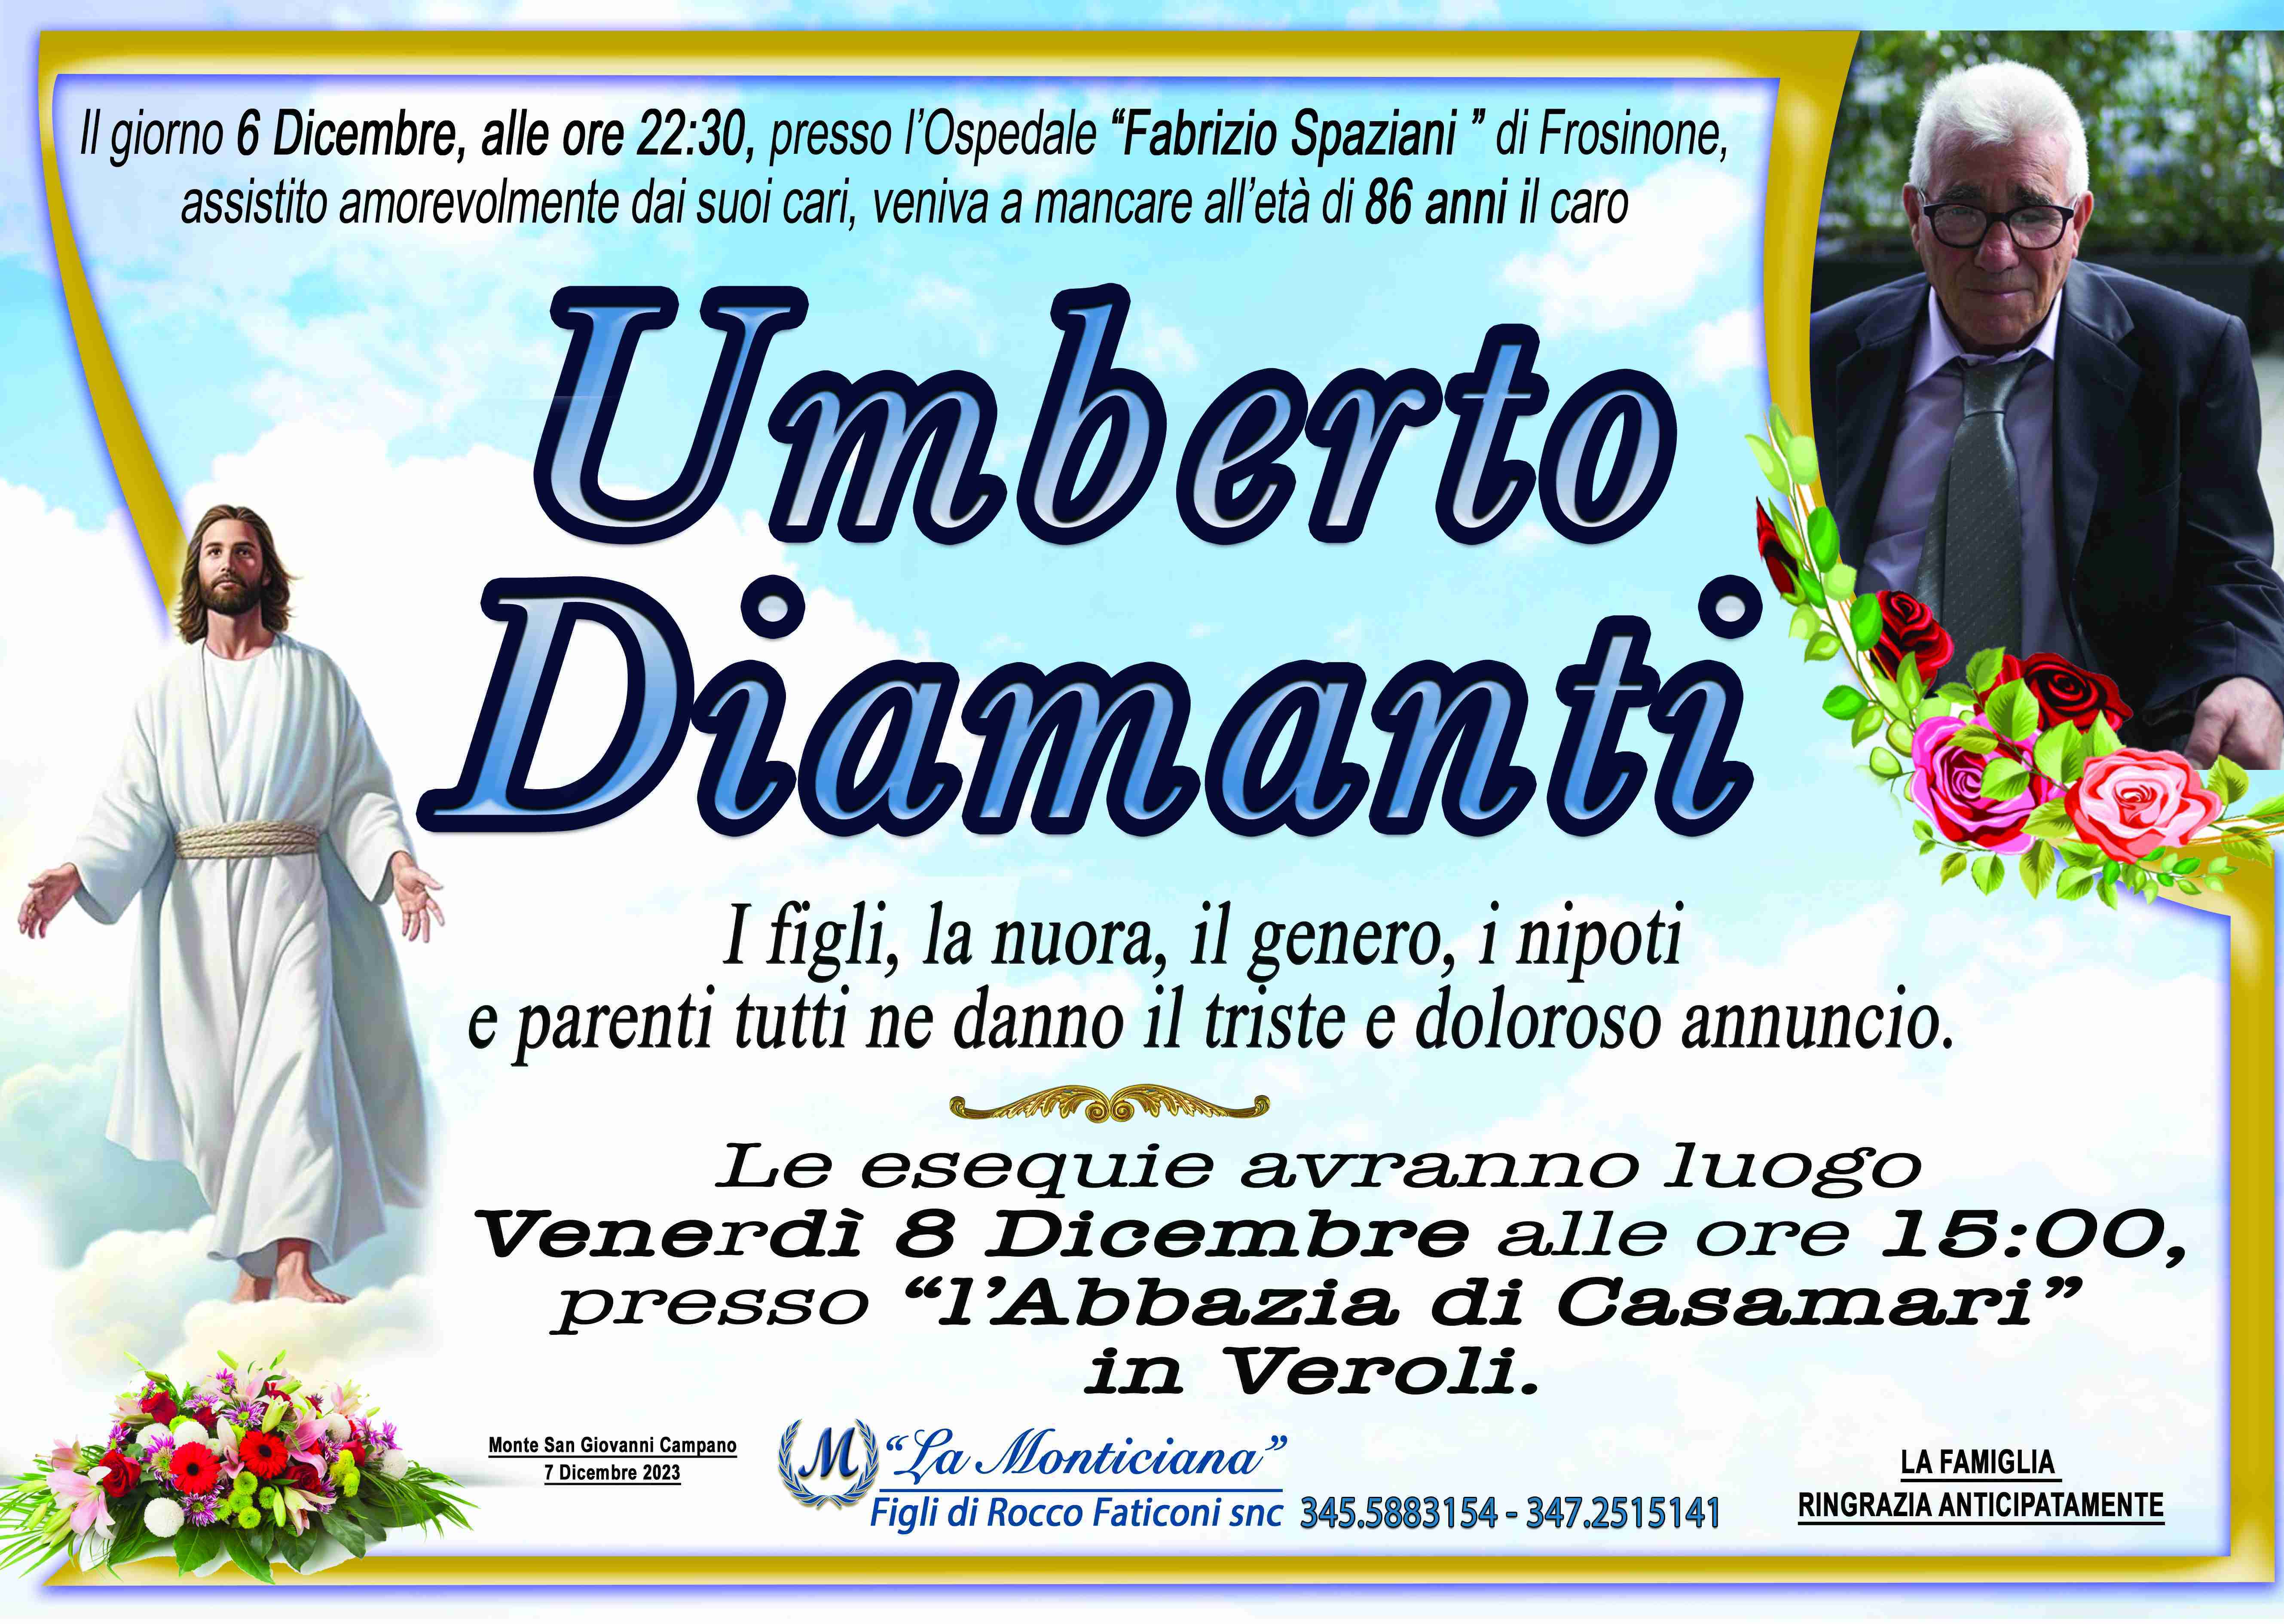 Umberto Diamanti